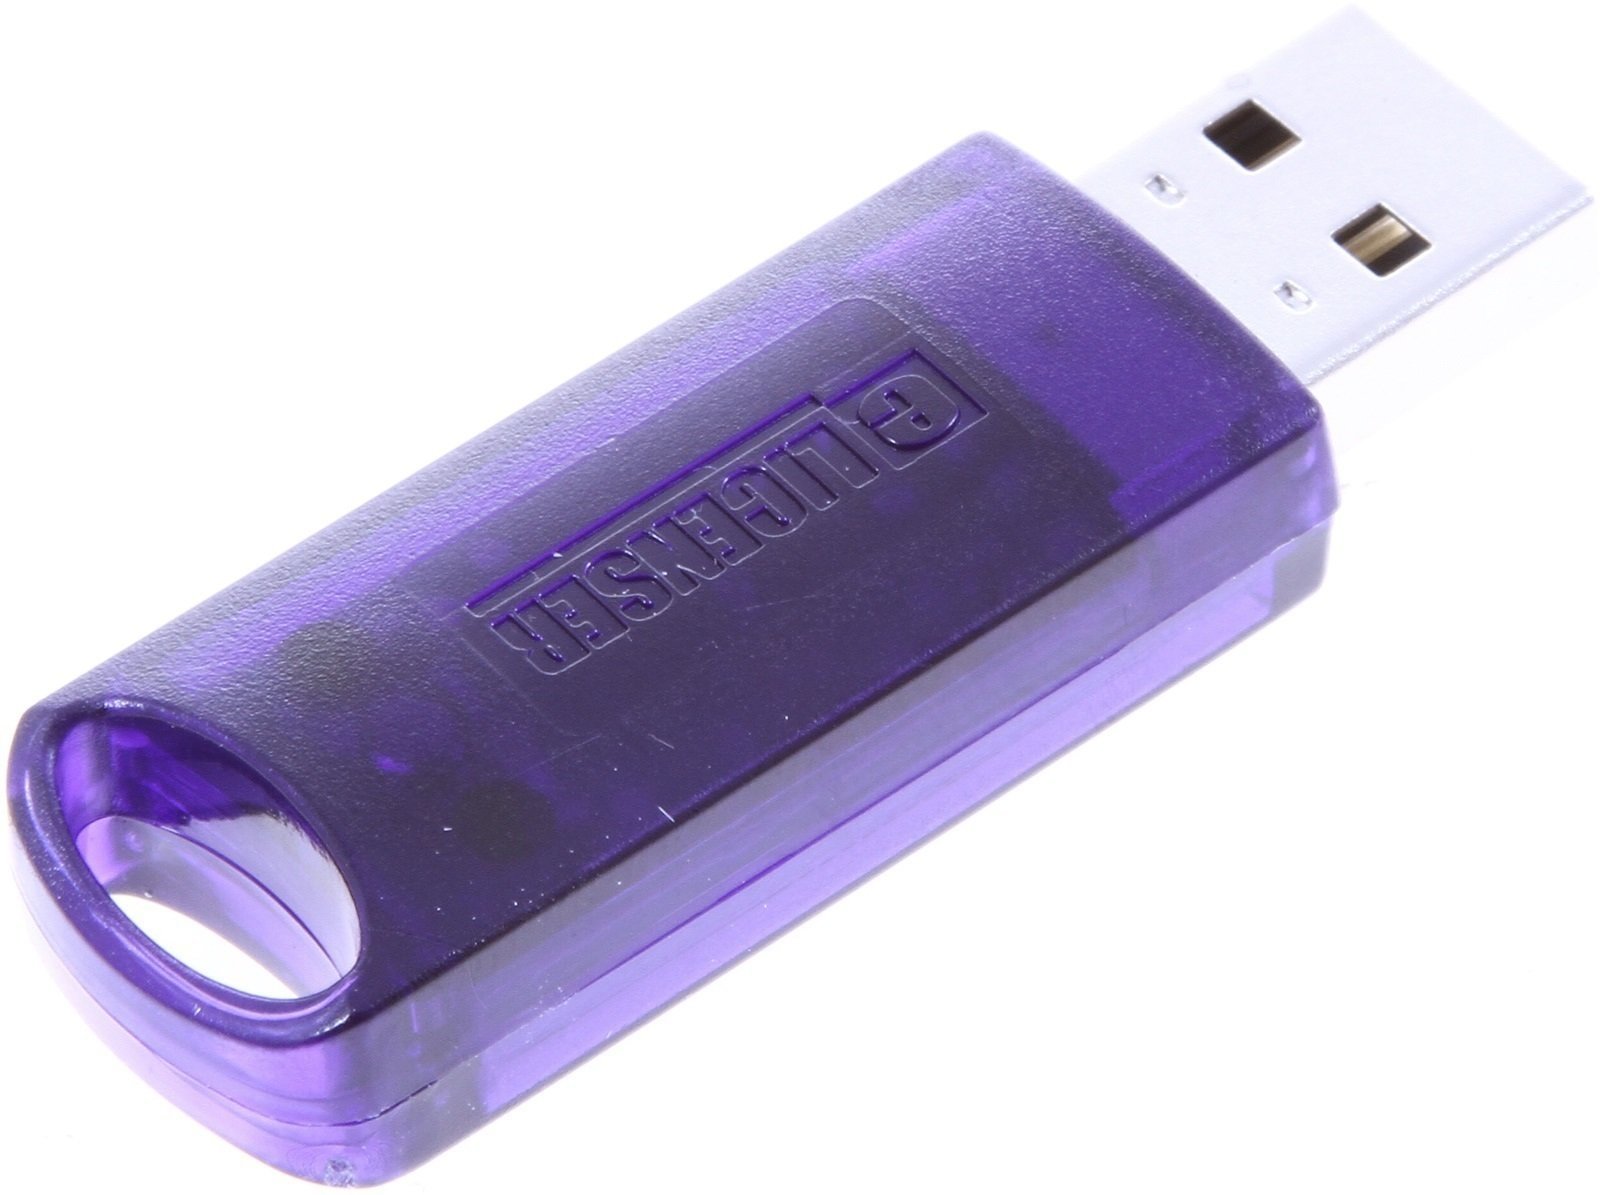 Licenčný prvok Steinberg Key USB eLicenser